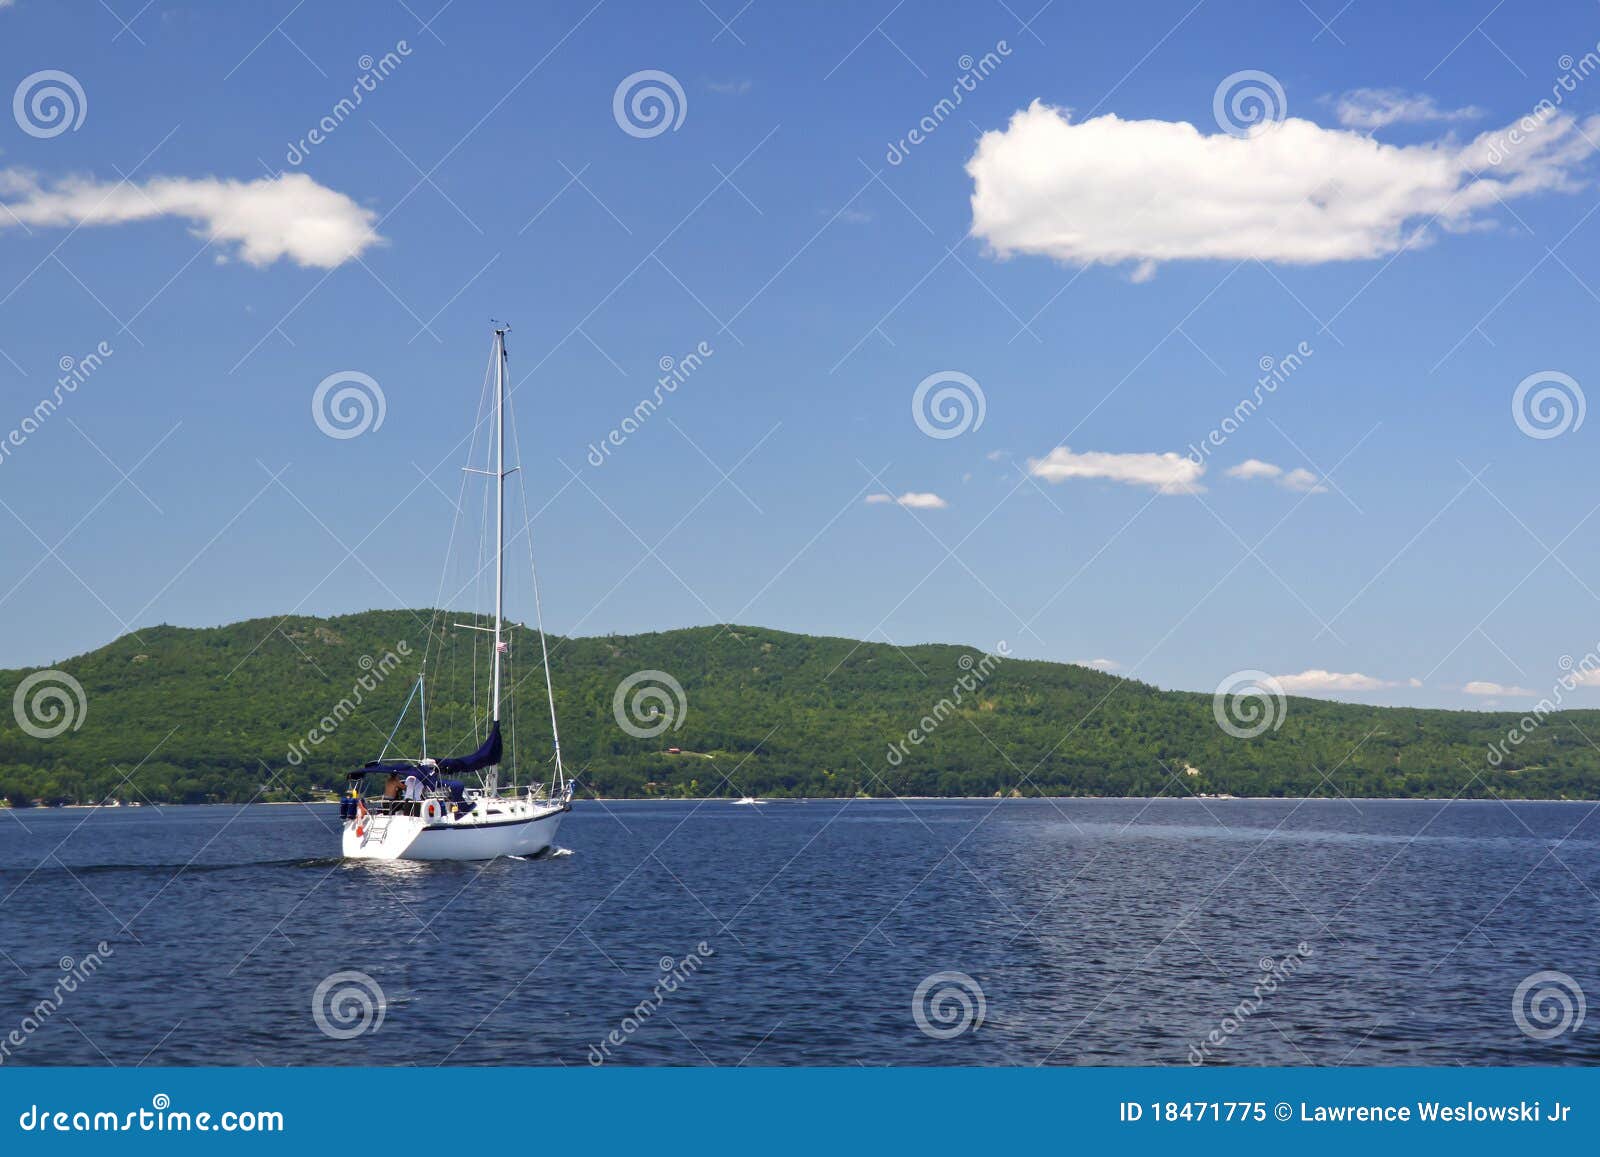 sailing lake champlain - blue skies ahead